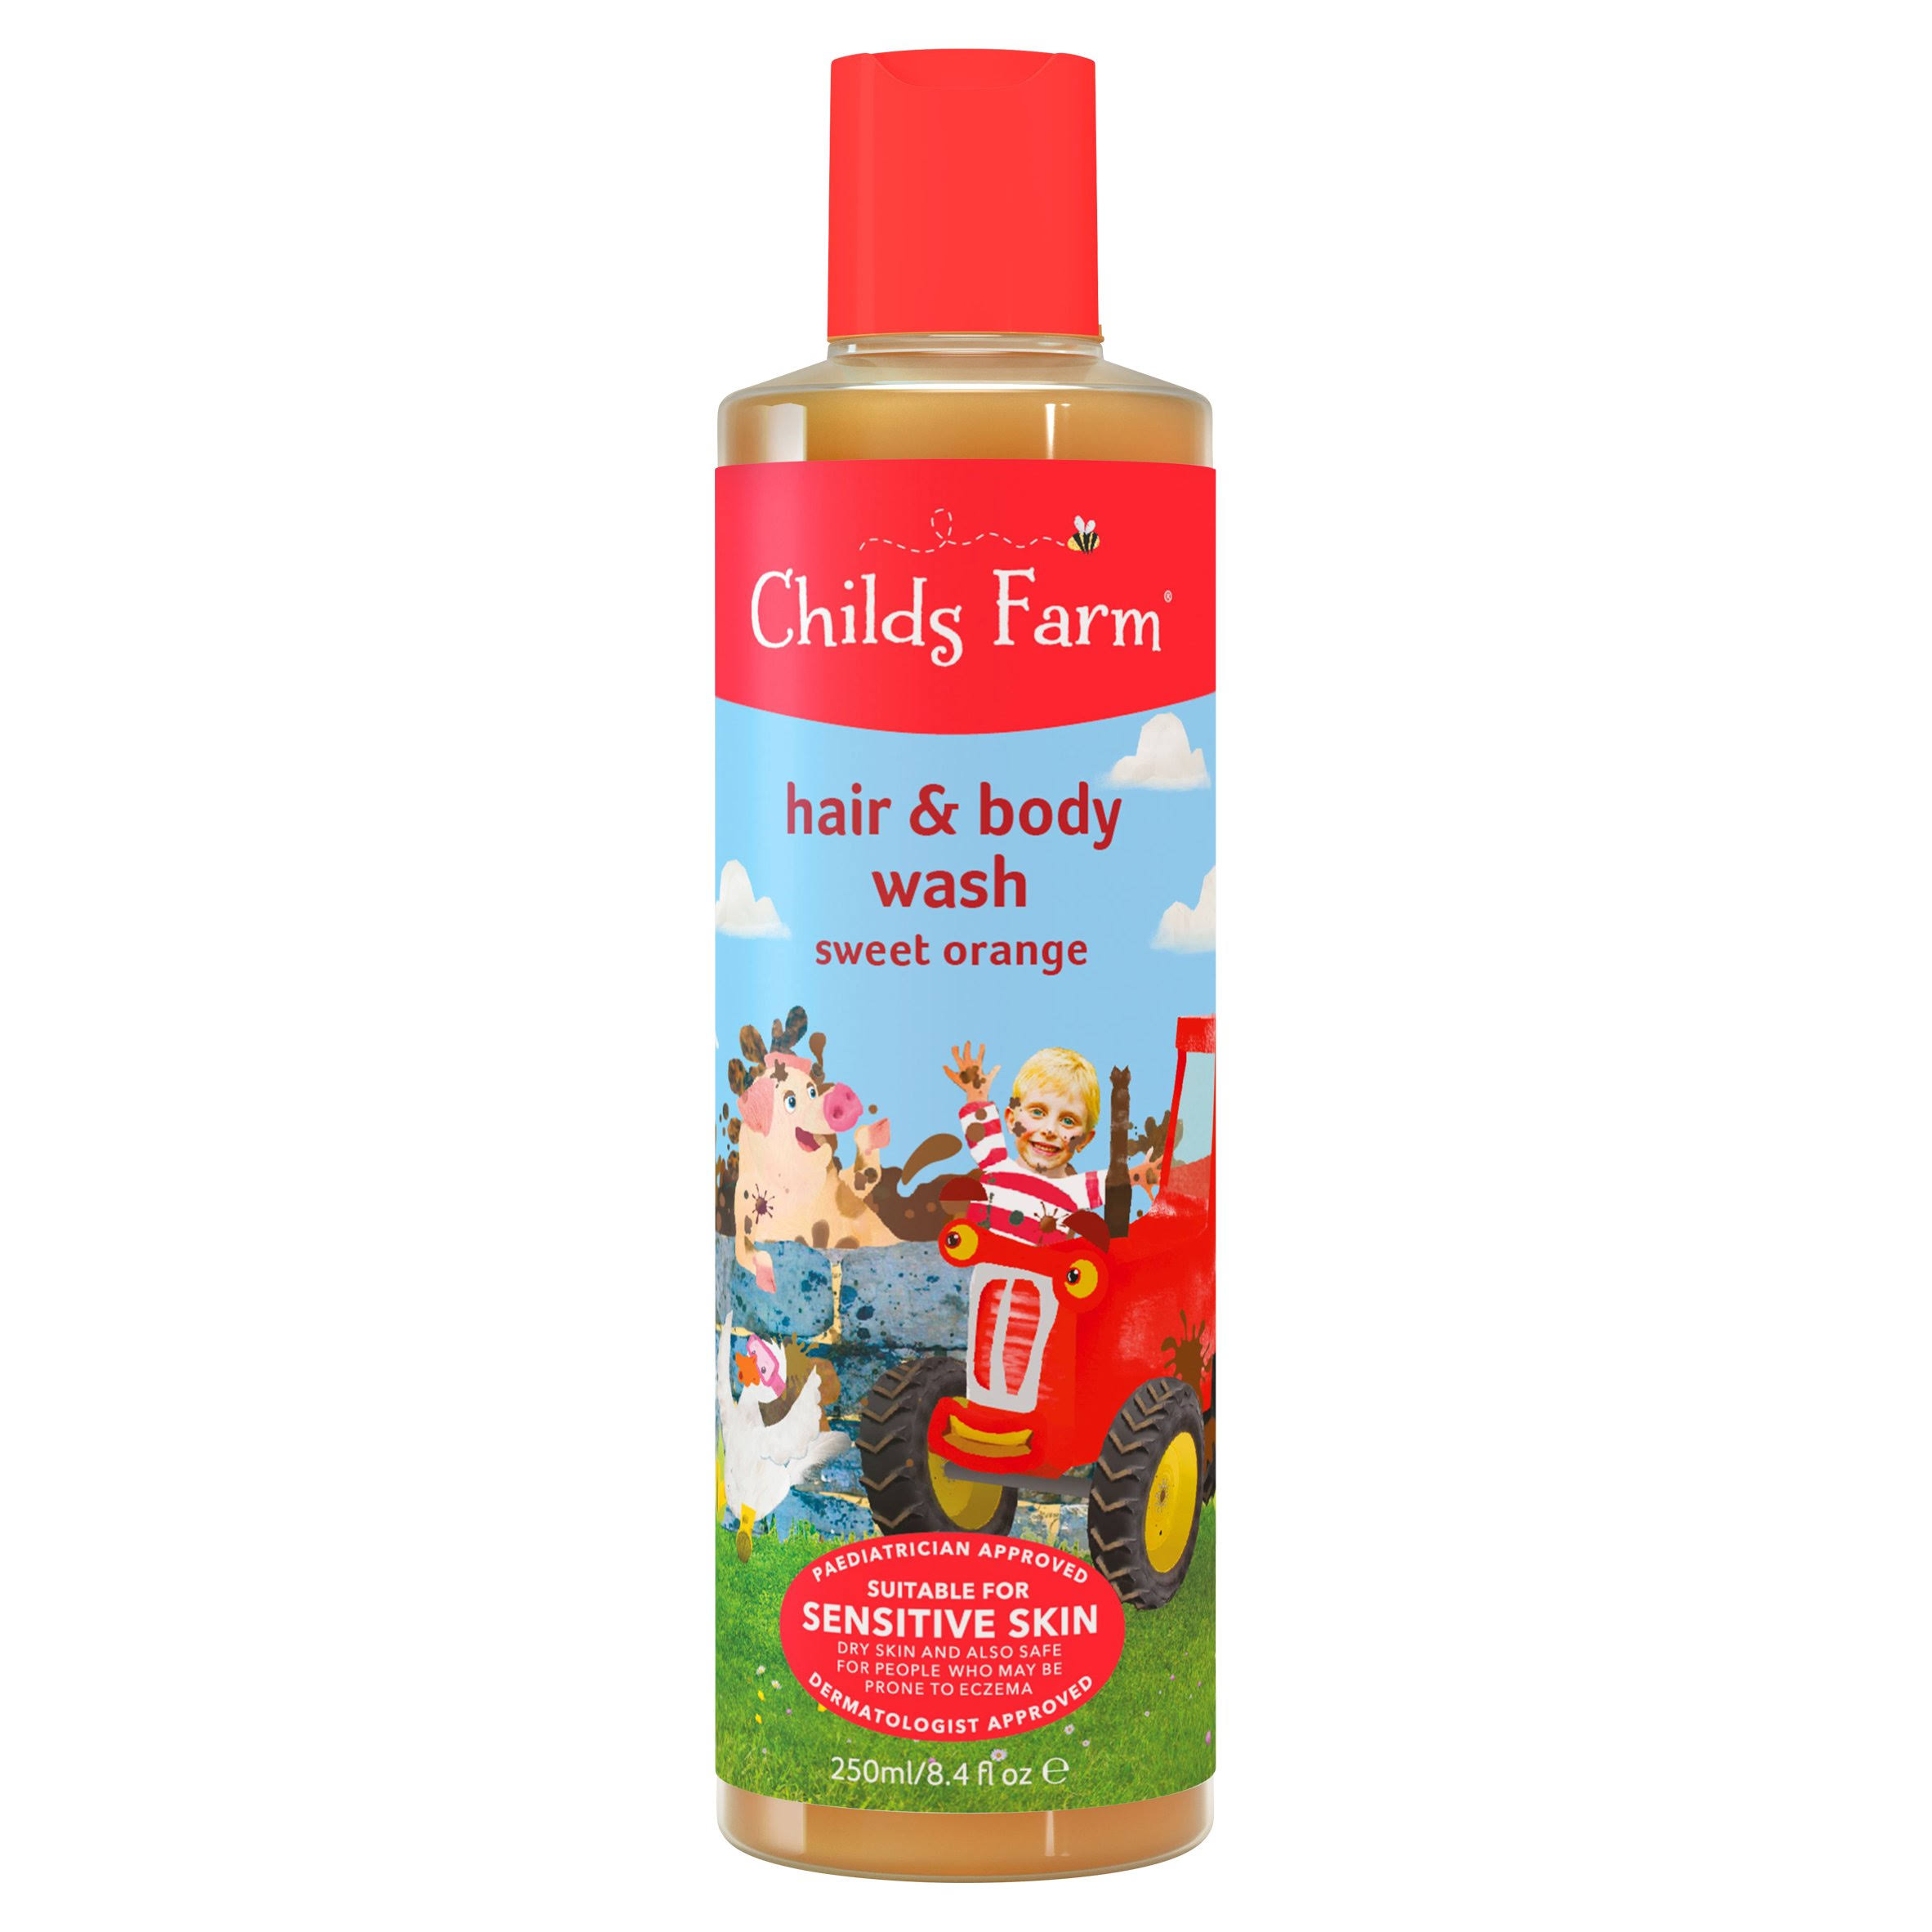 Childs Farm Hair & Body Wash - Sweet Orange, 250ml